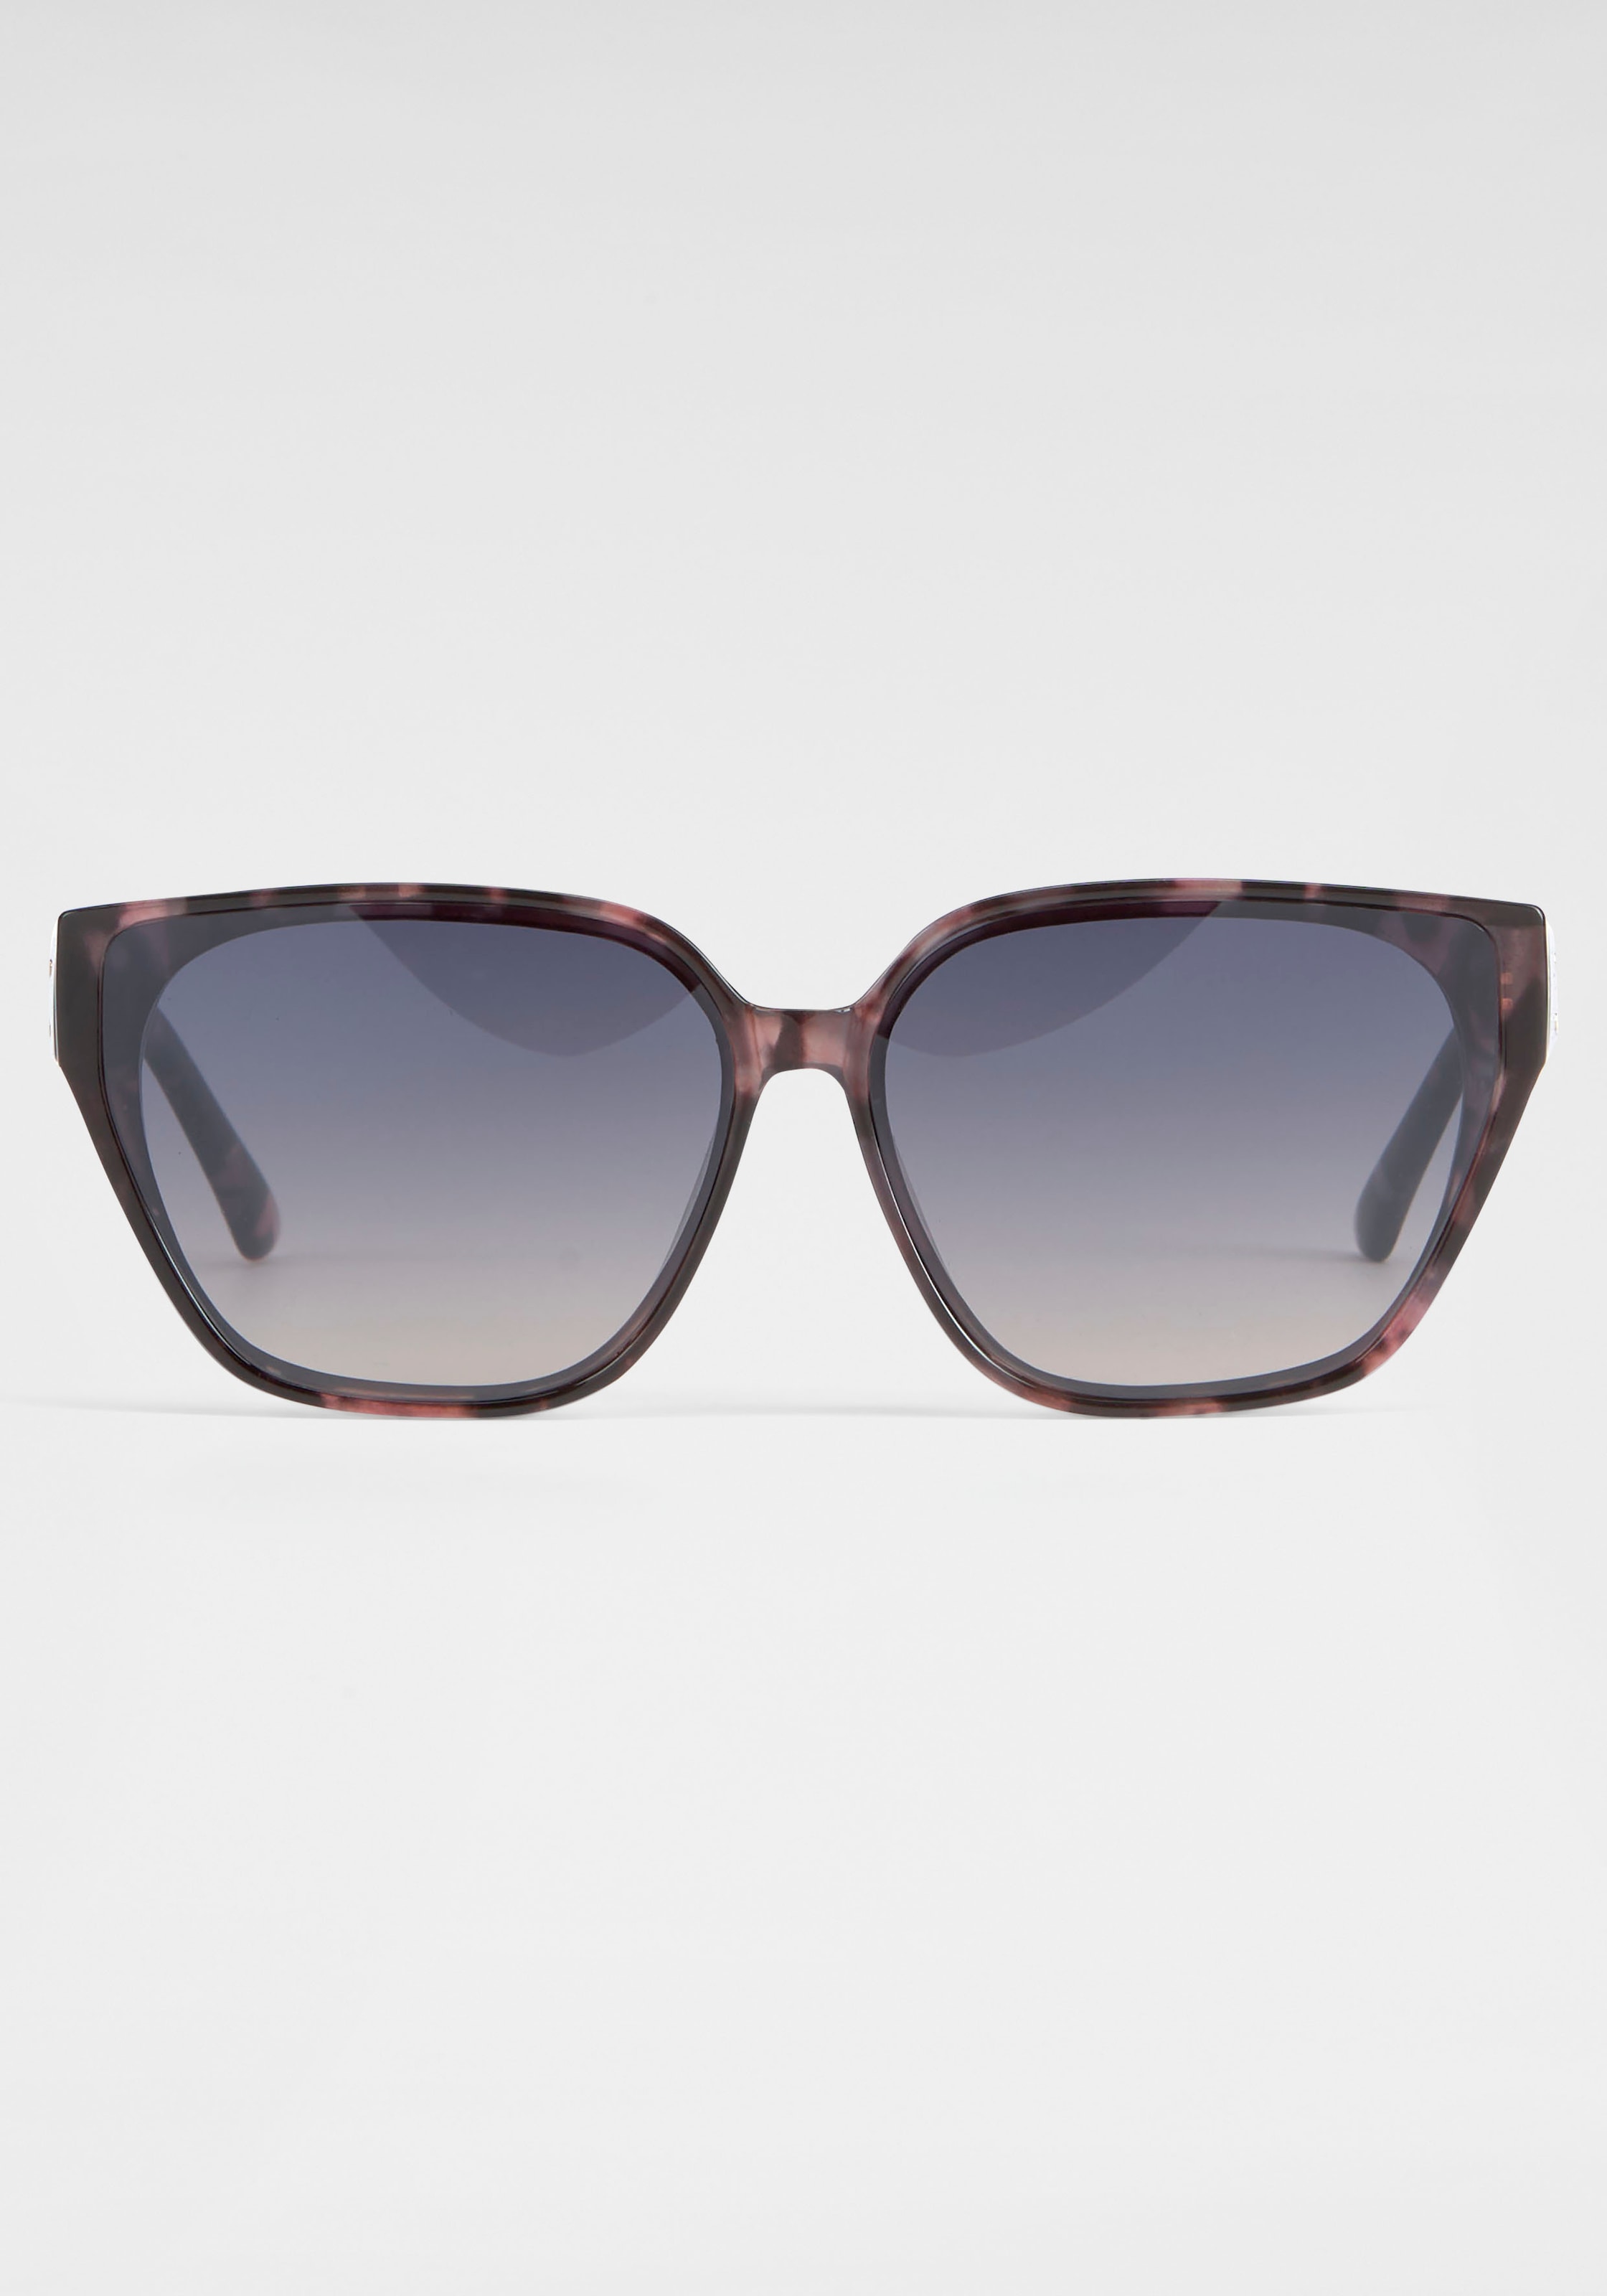 catwalk Sonnenbrille, bei Leo-Optik Eyewear